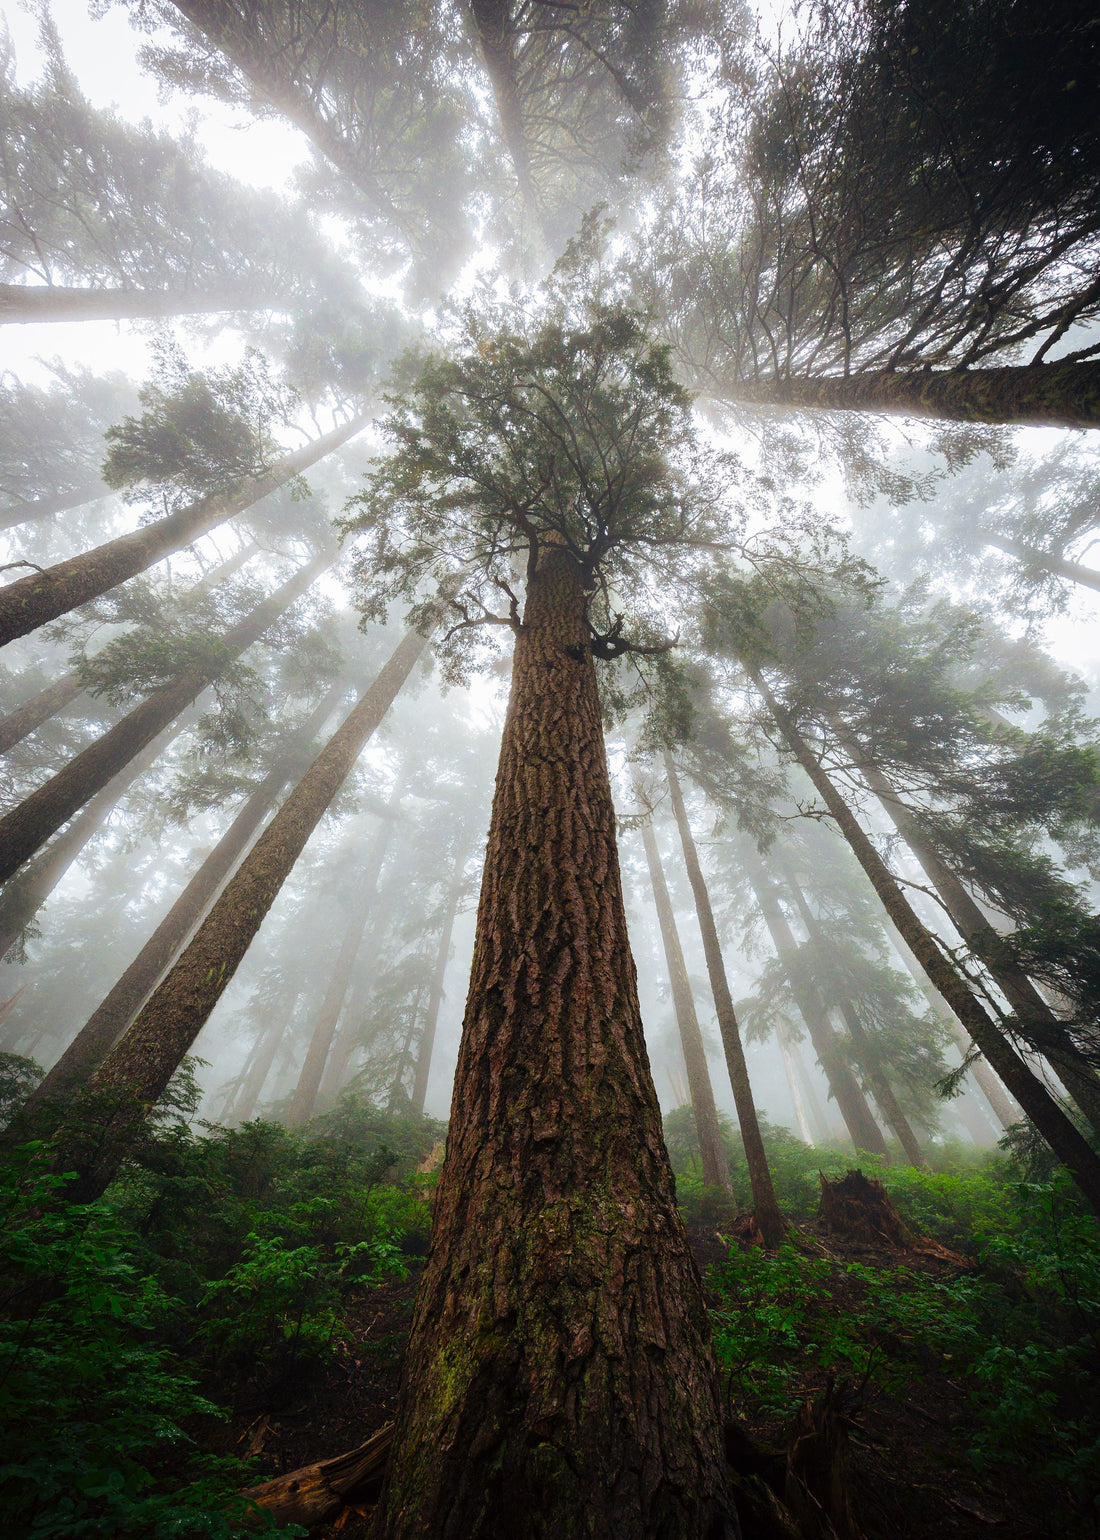 Giant Sequoia Redwood Tree Seeds | Redwood Tree Seeds | Giant Sequoia Tree Seeds | Sequoiadendron giganteum Seeds | Sierra Redwood Seeds